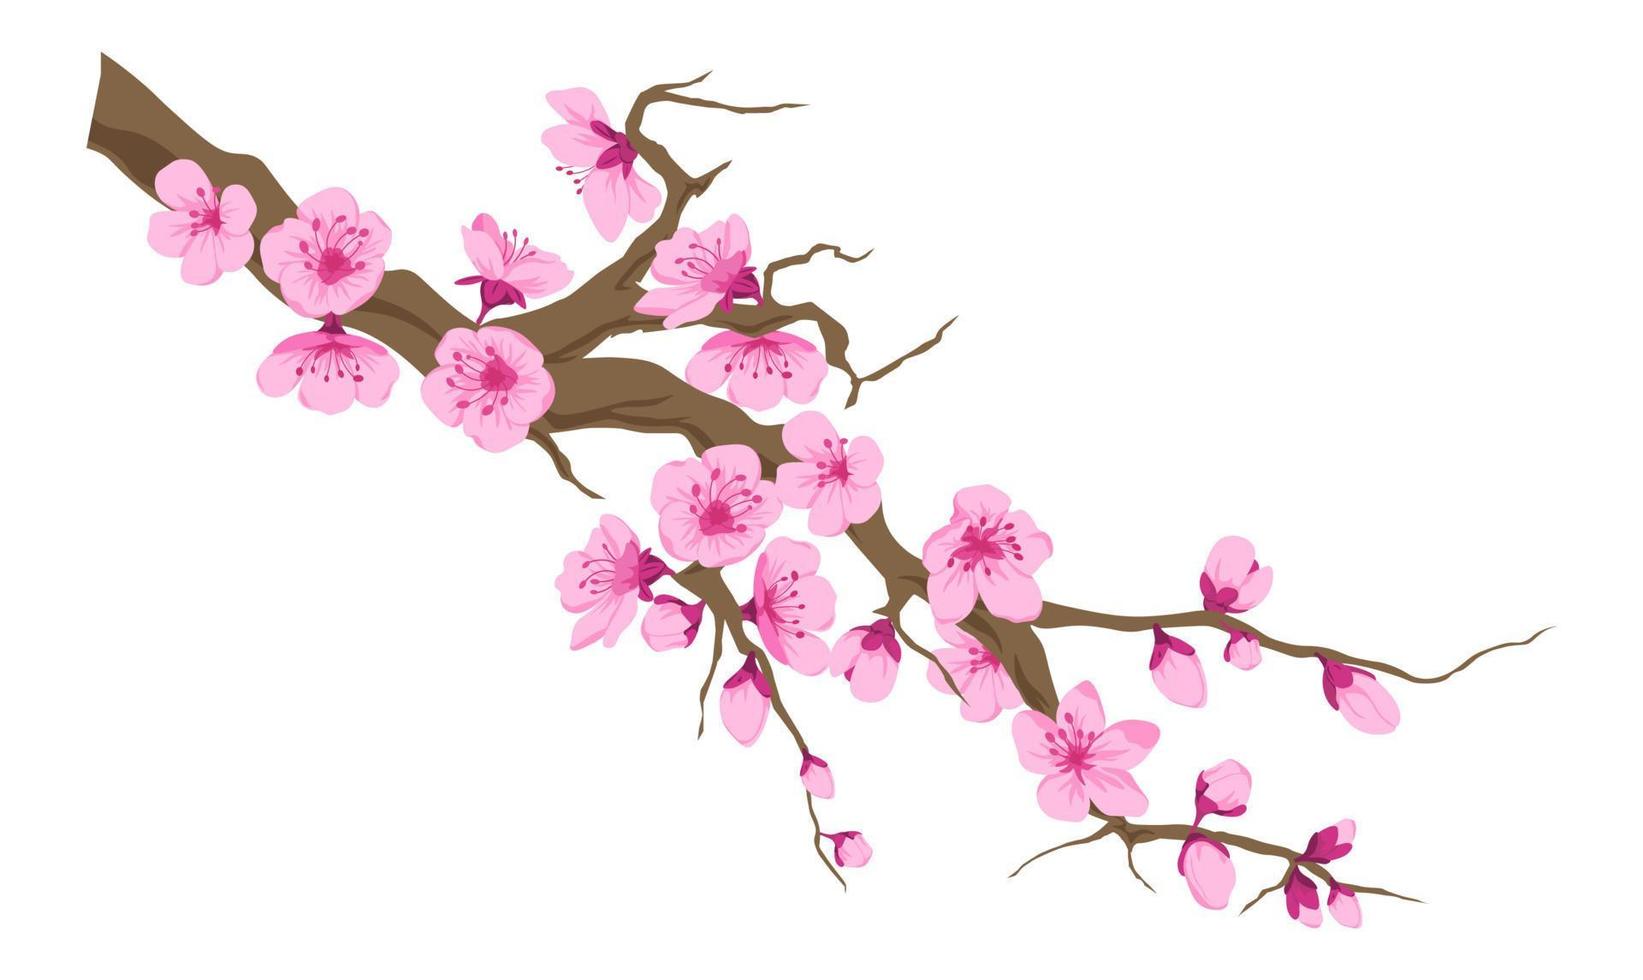 rama de cerezo con flores florecientes vector